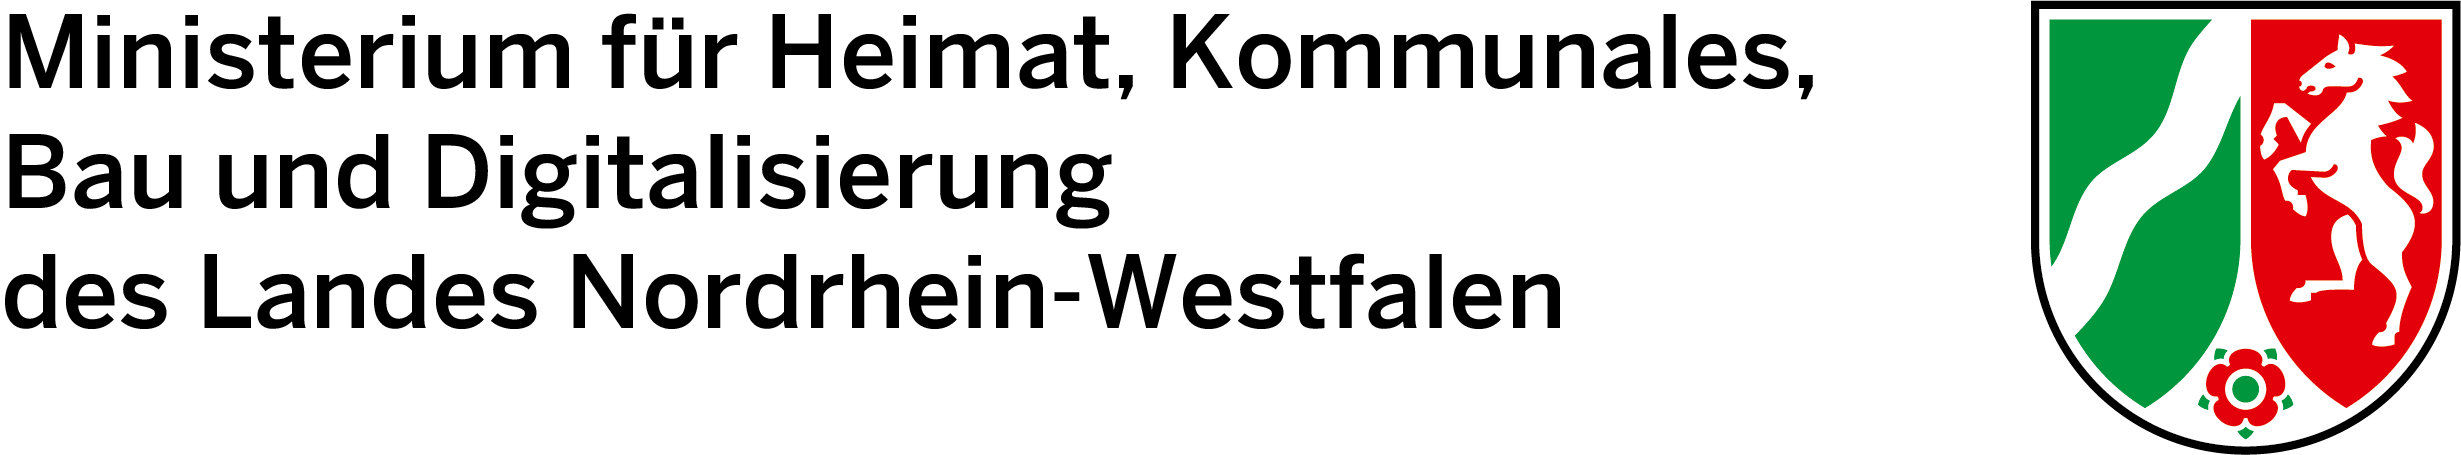 Bauportal.nrw Logo